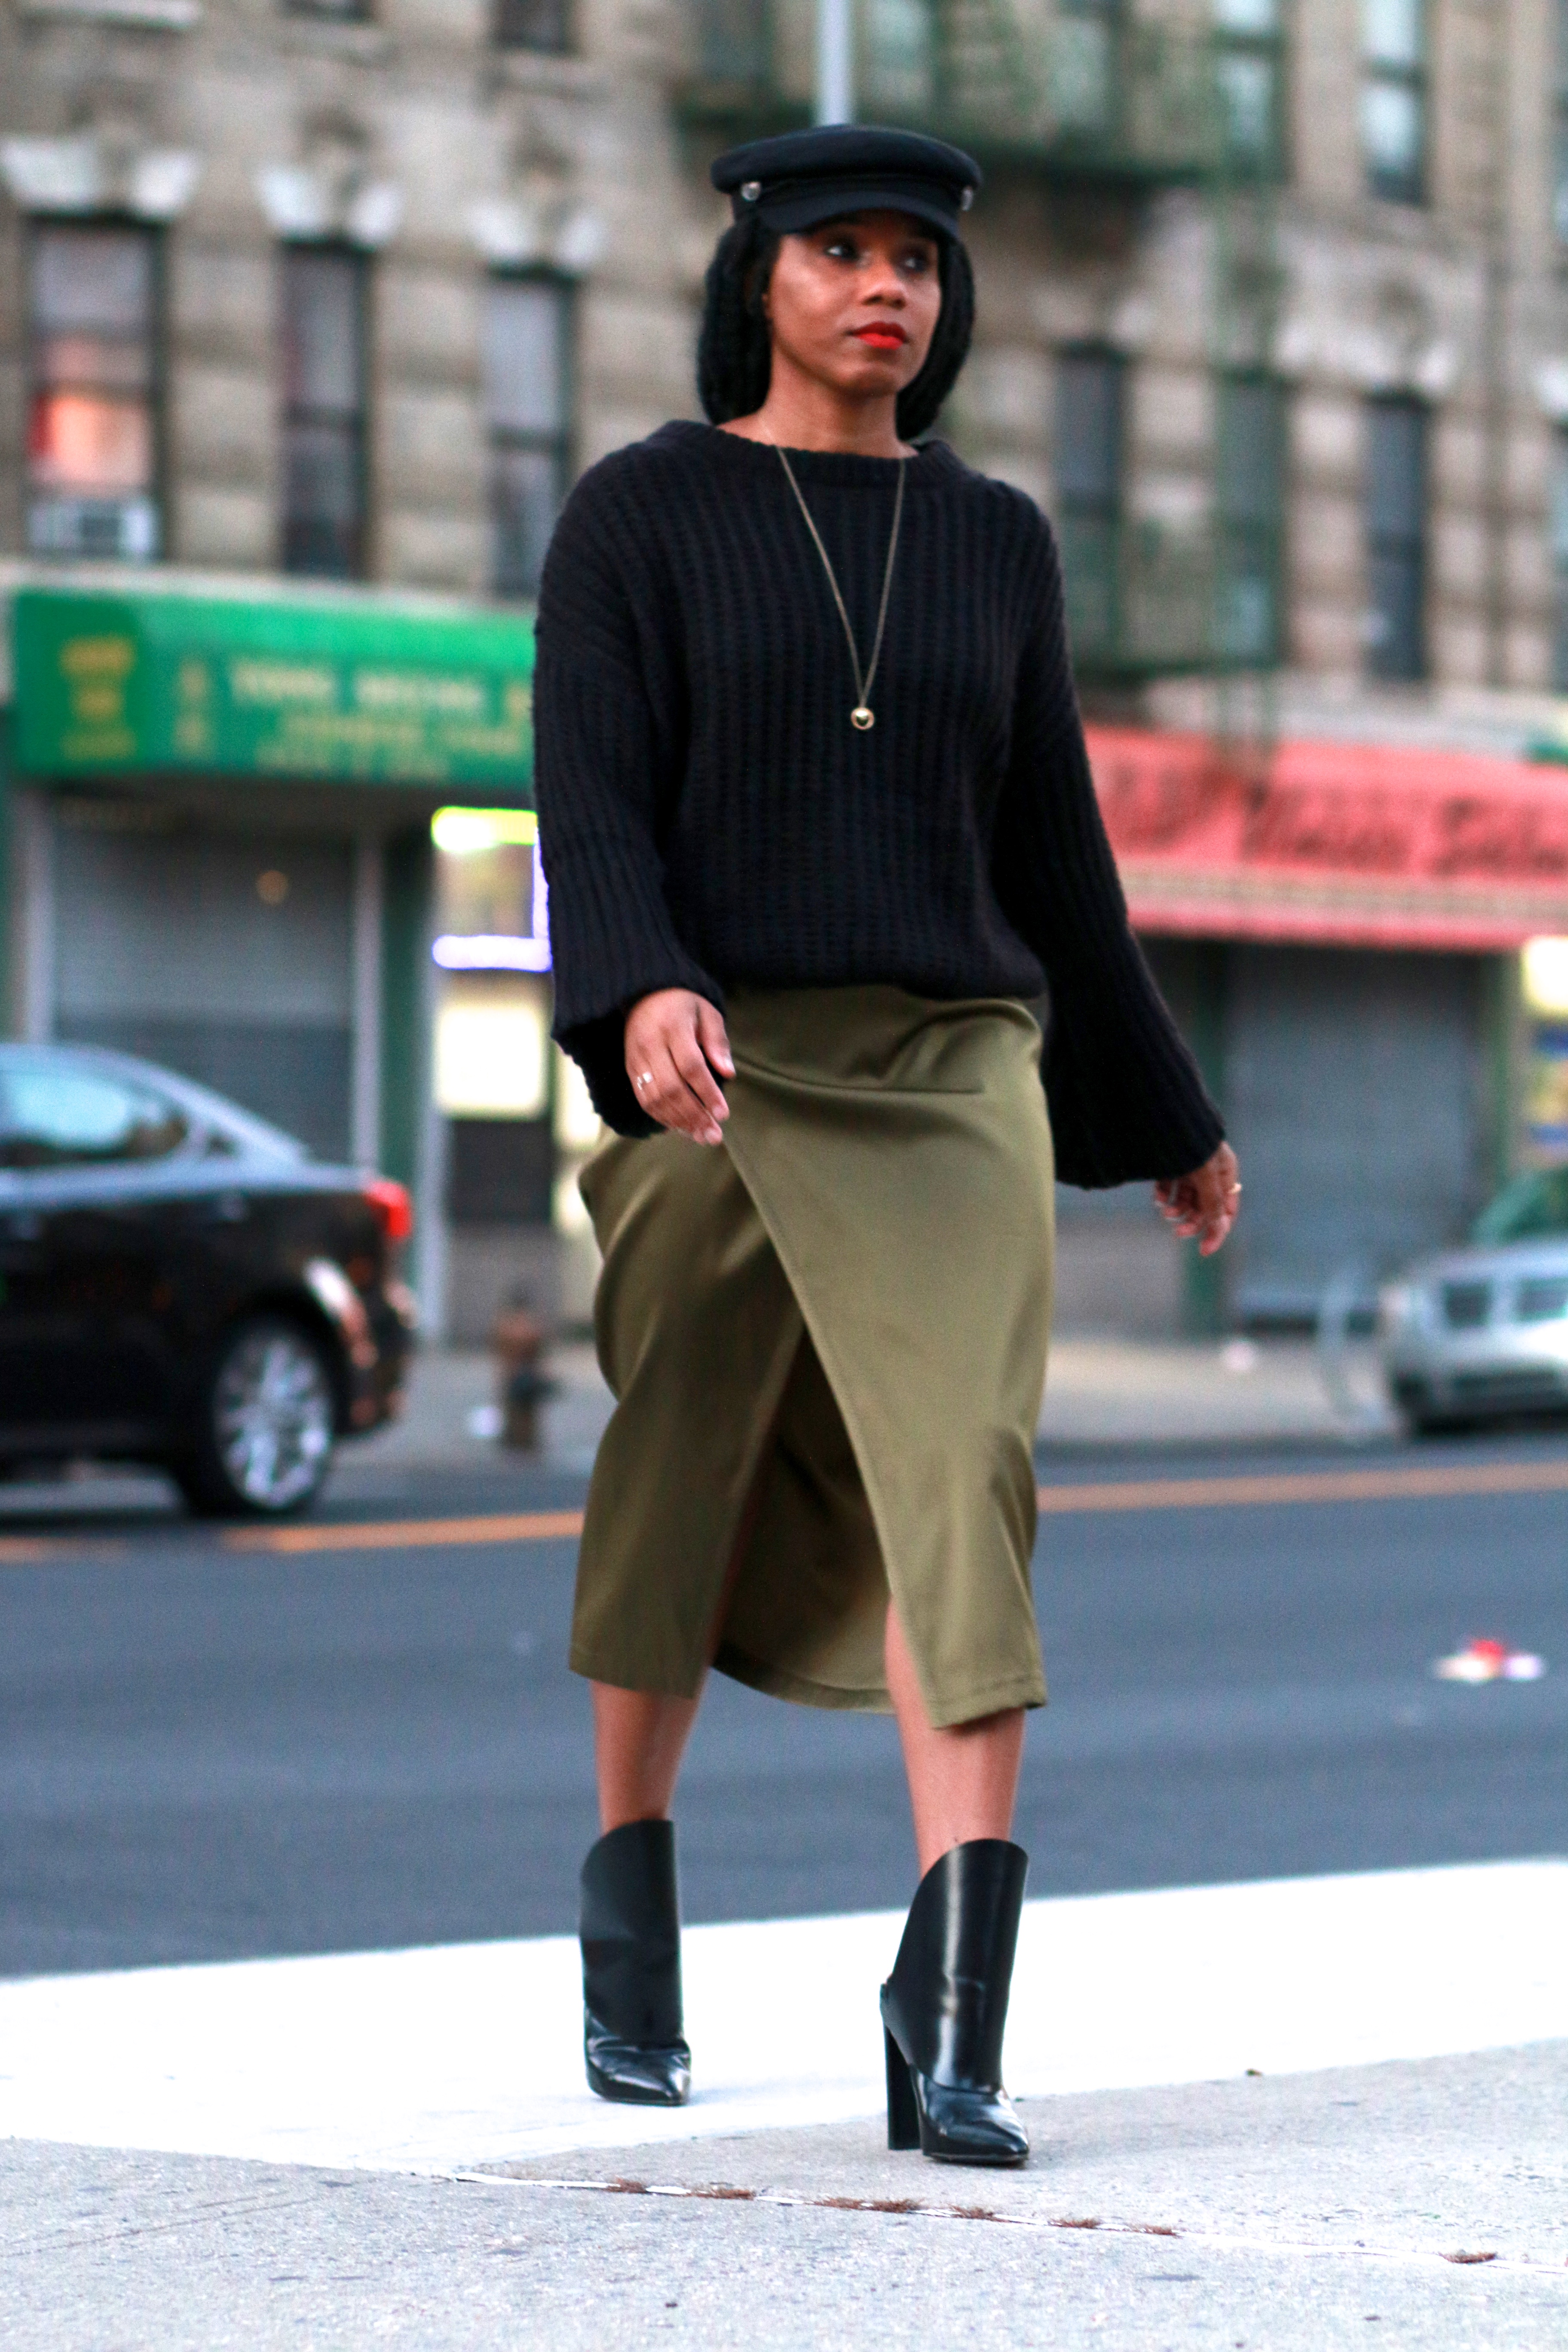 I refuse to wear stockings – Fashion Steele NYC